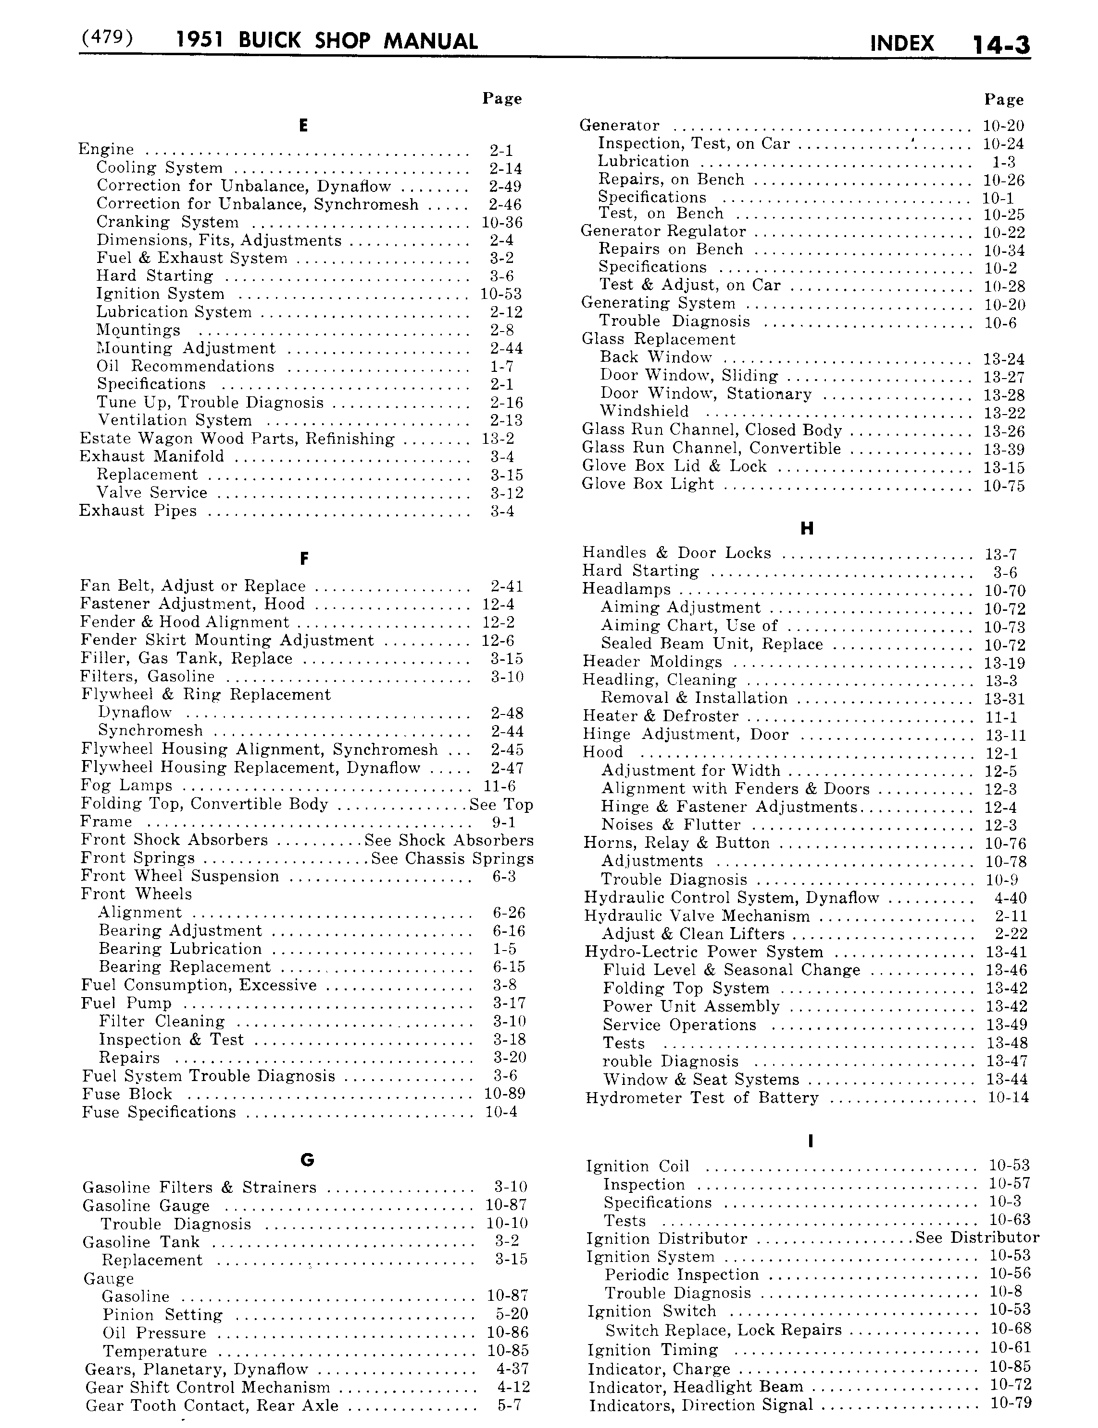 n_15 1951 Buick Shop Manual - Index-003-003.jpg